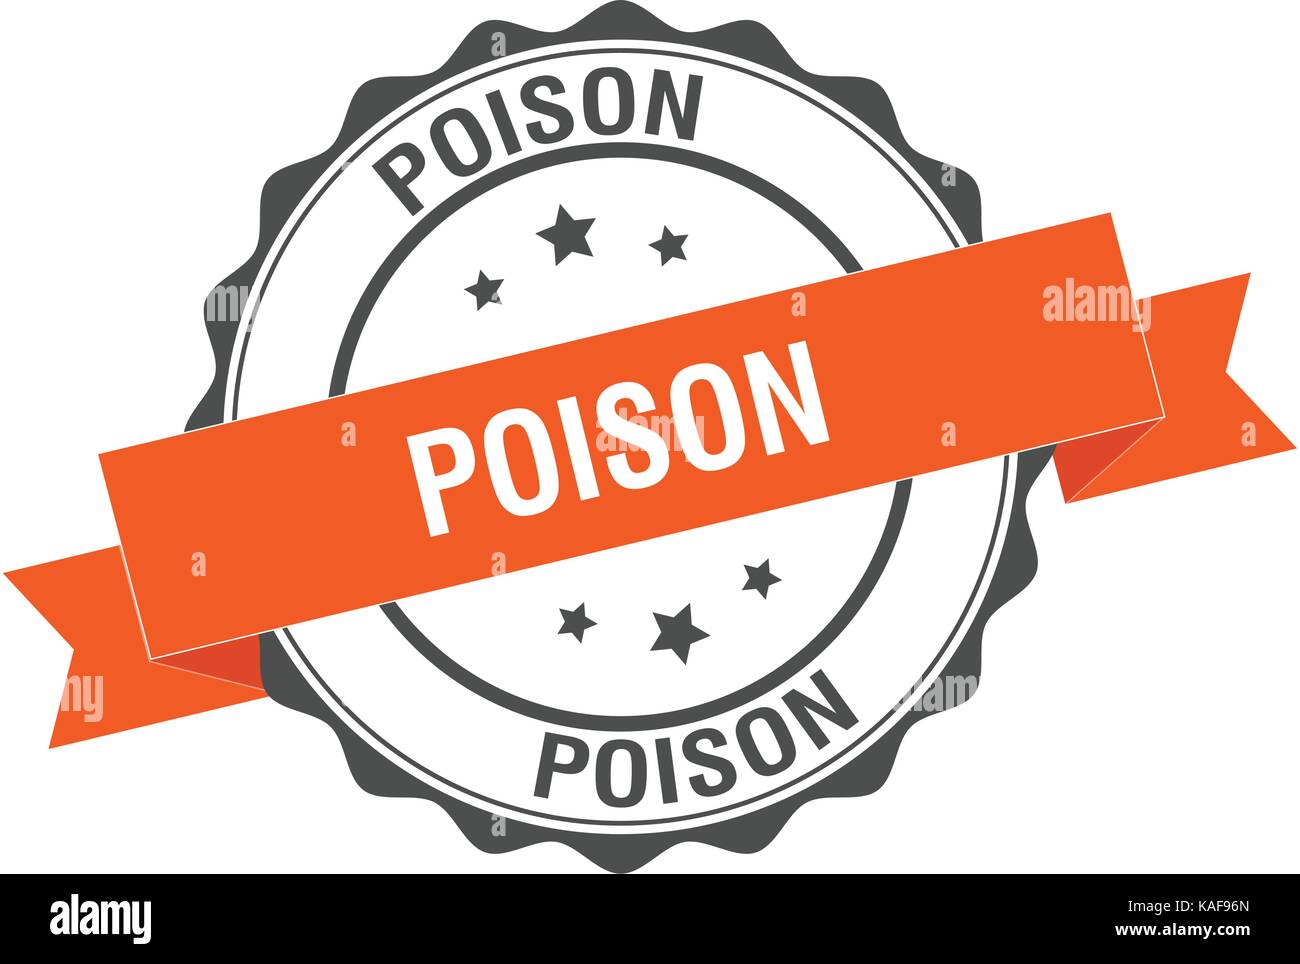 Poison stamp illustration Stock Vector